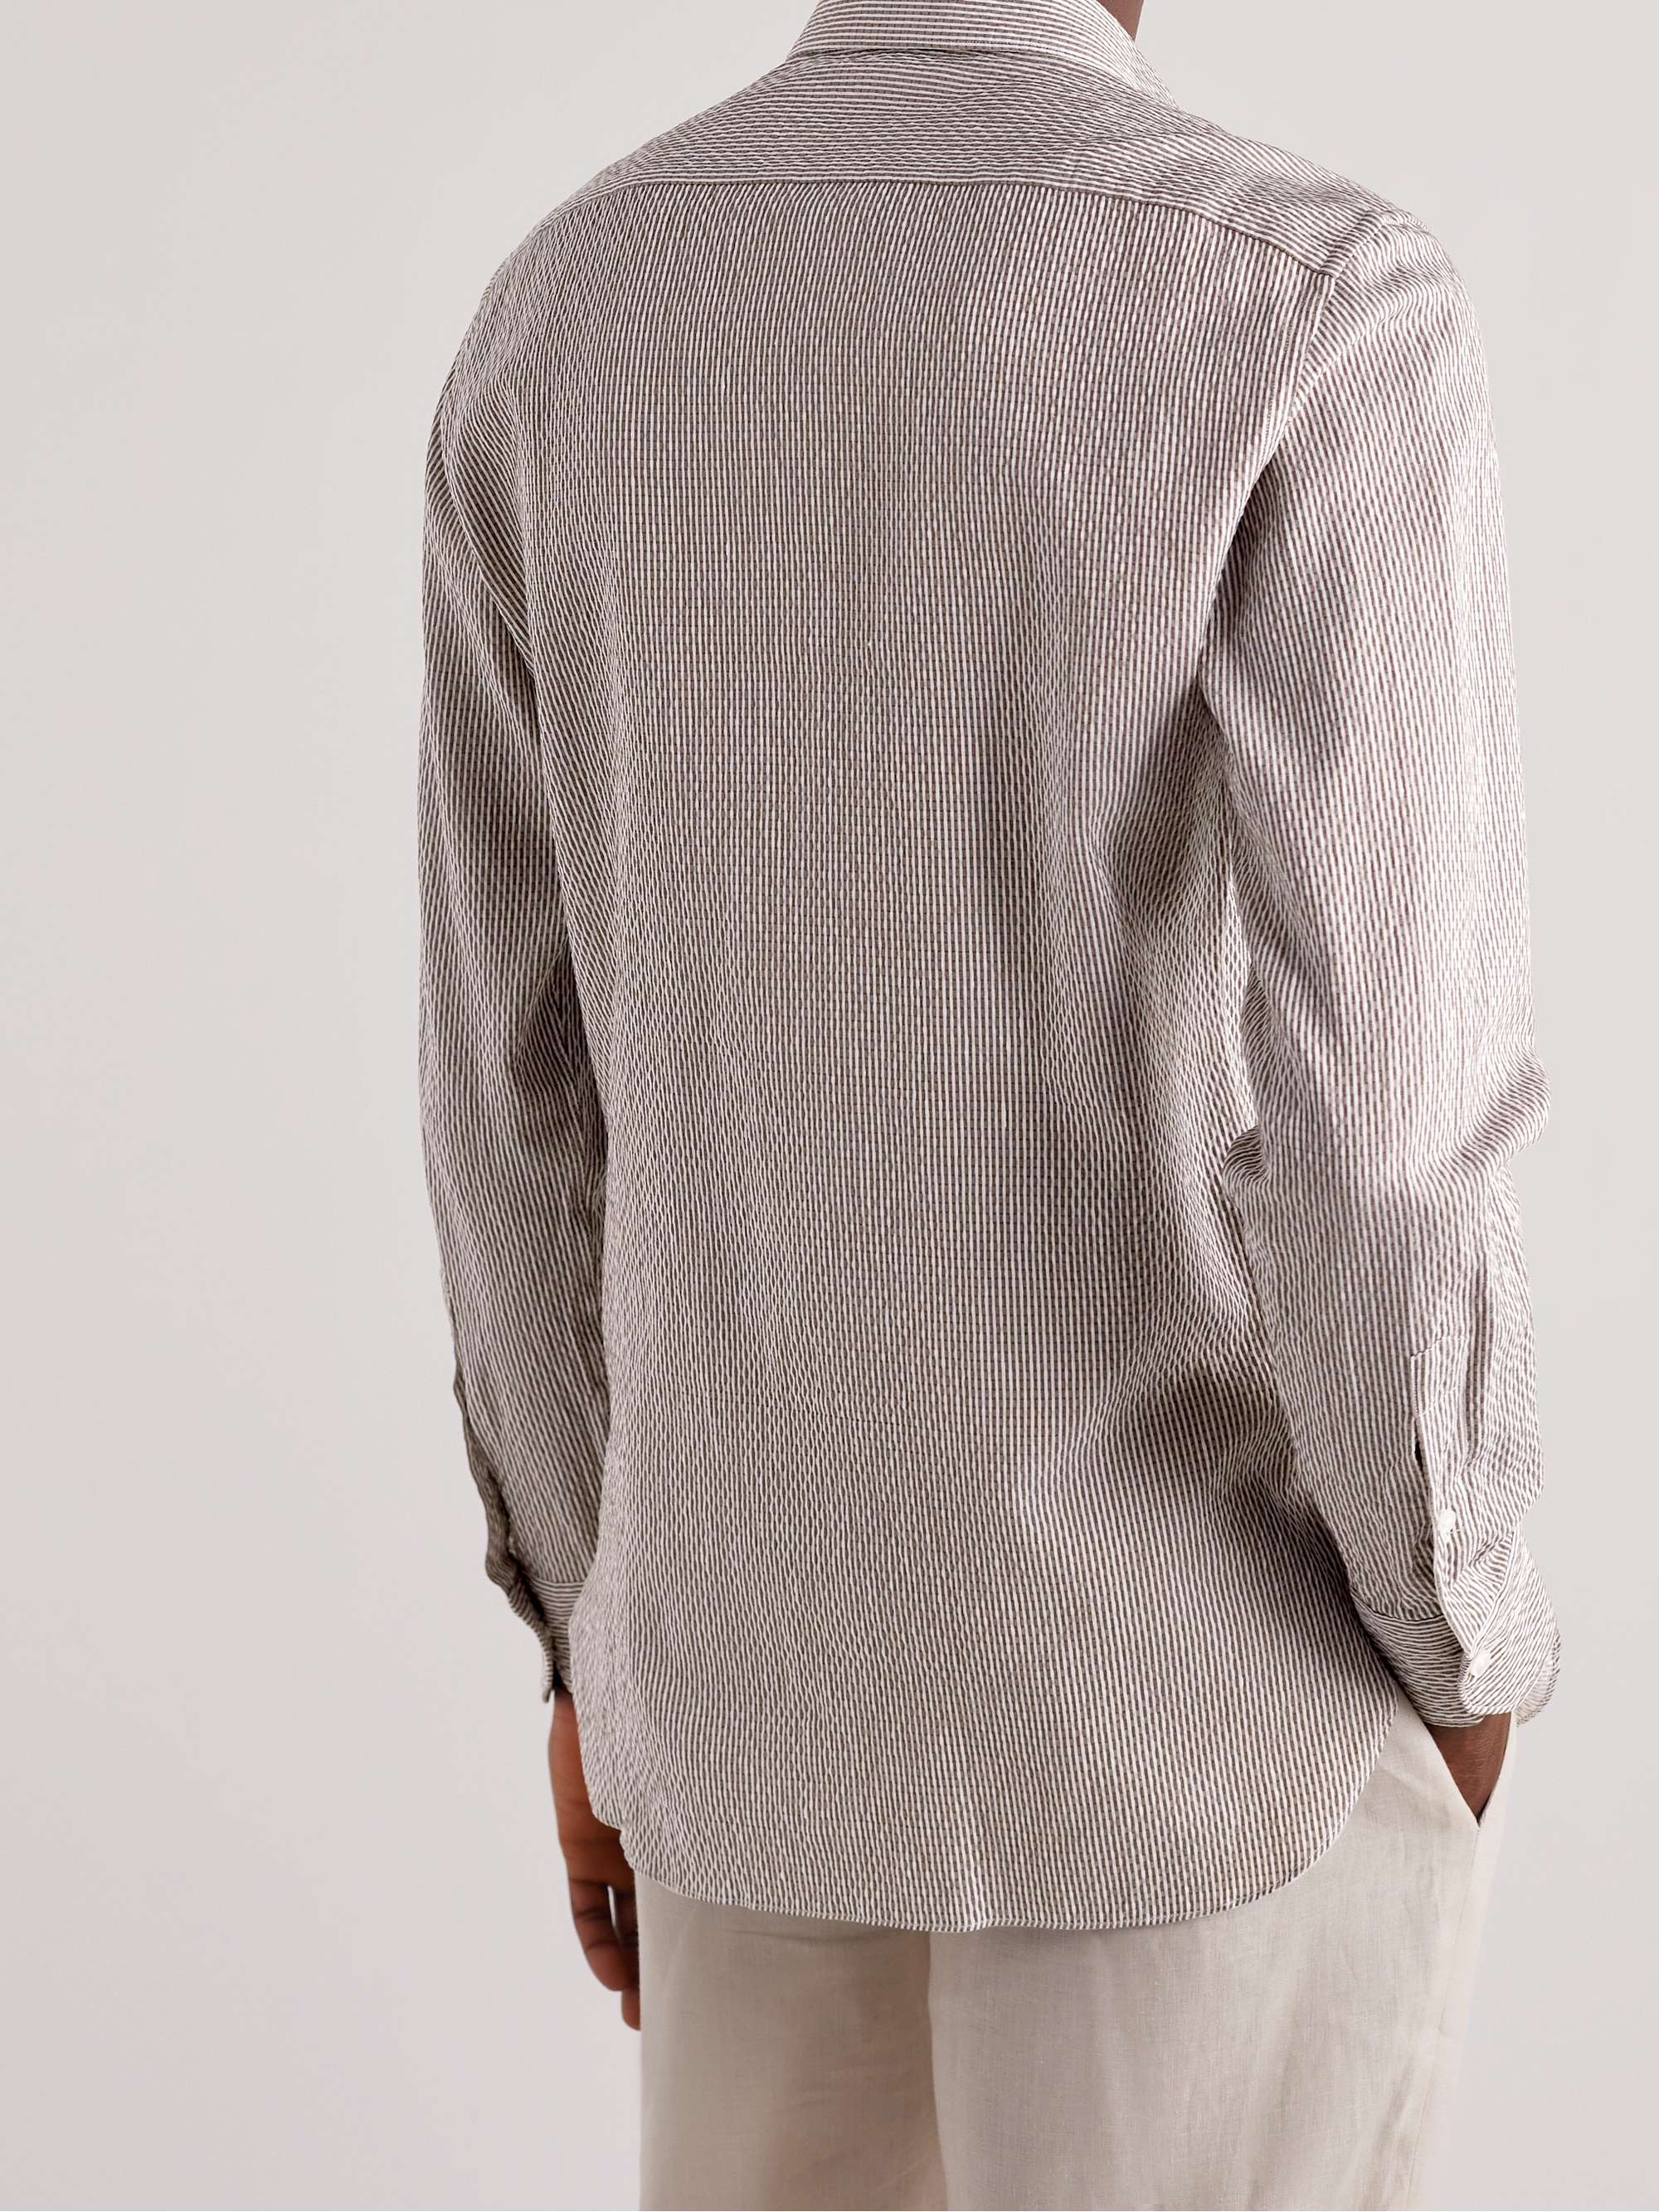 ZEGNA Slim-Fit Striped Cotton and Linen-Blend Seersucker Shirt